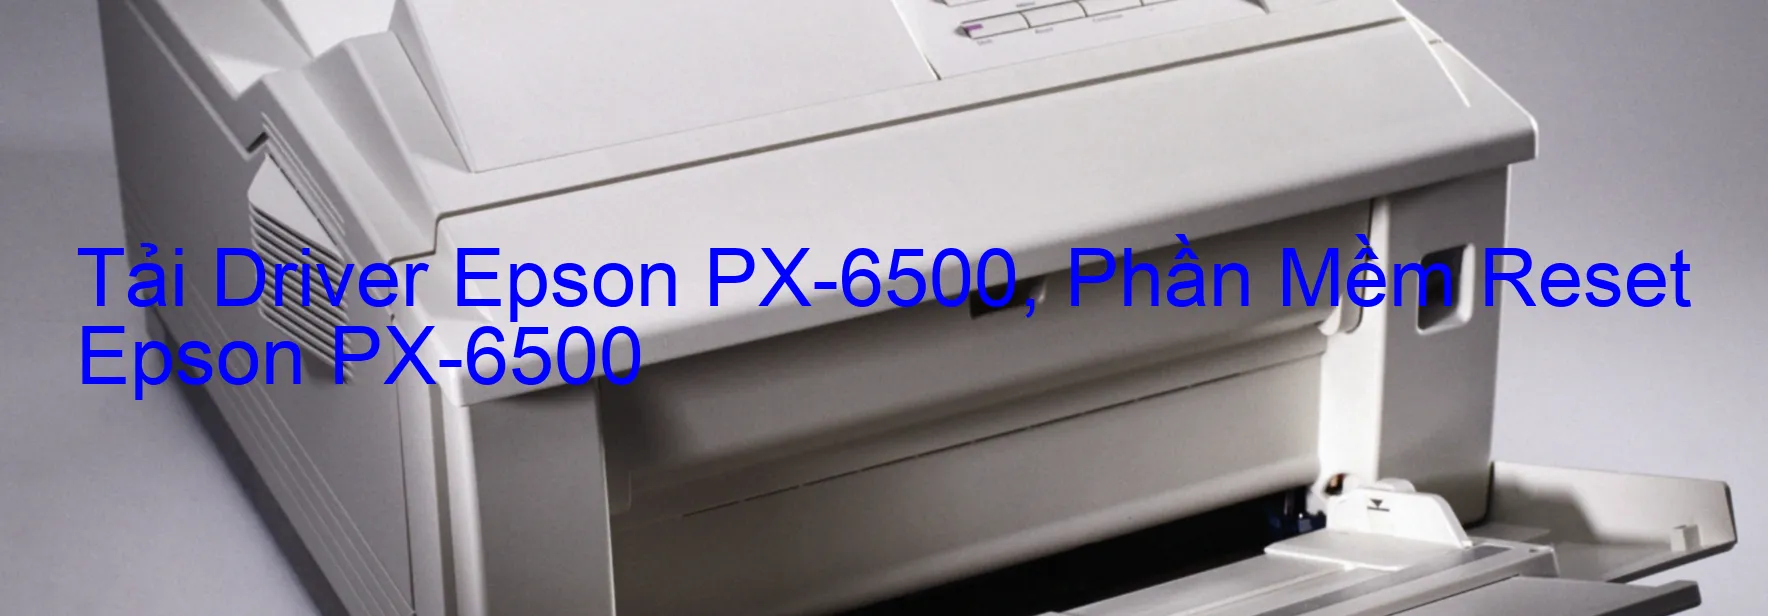 Driver Epson PX-6500, Phần Mềm Reset Epson PX-6500